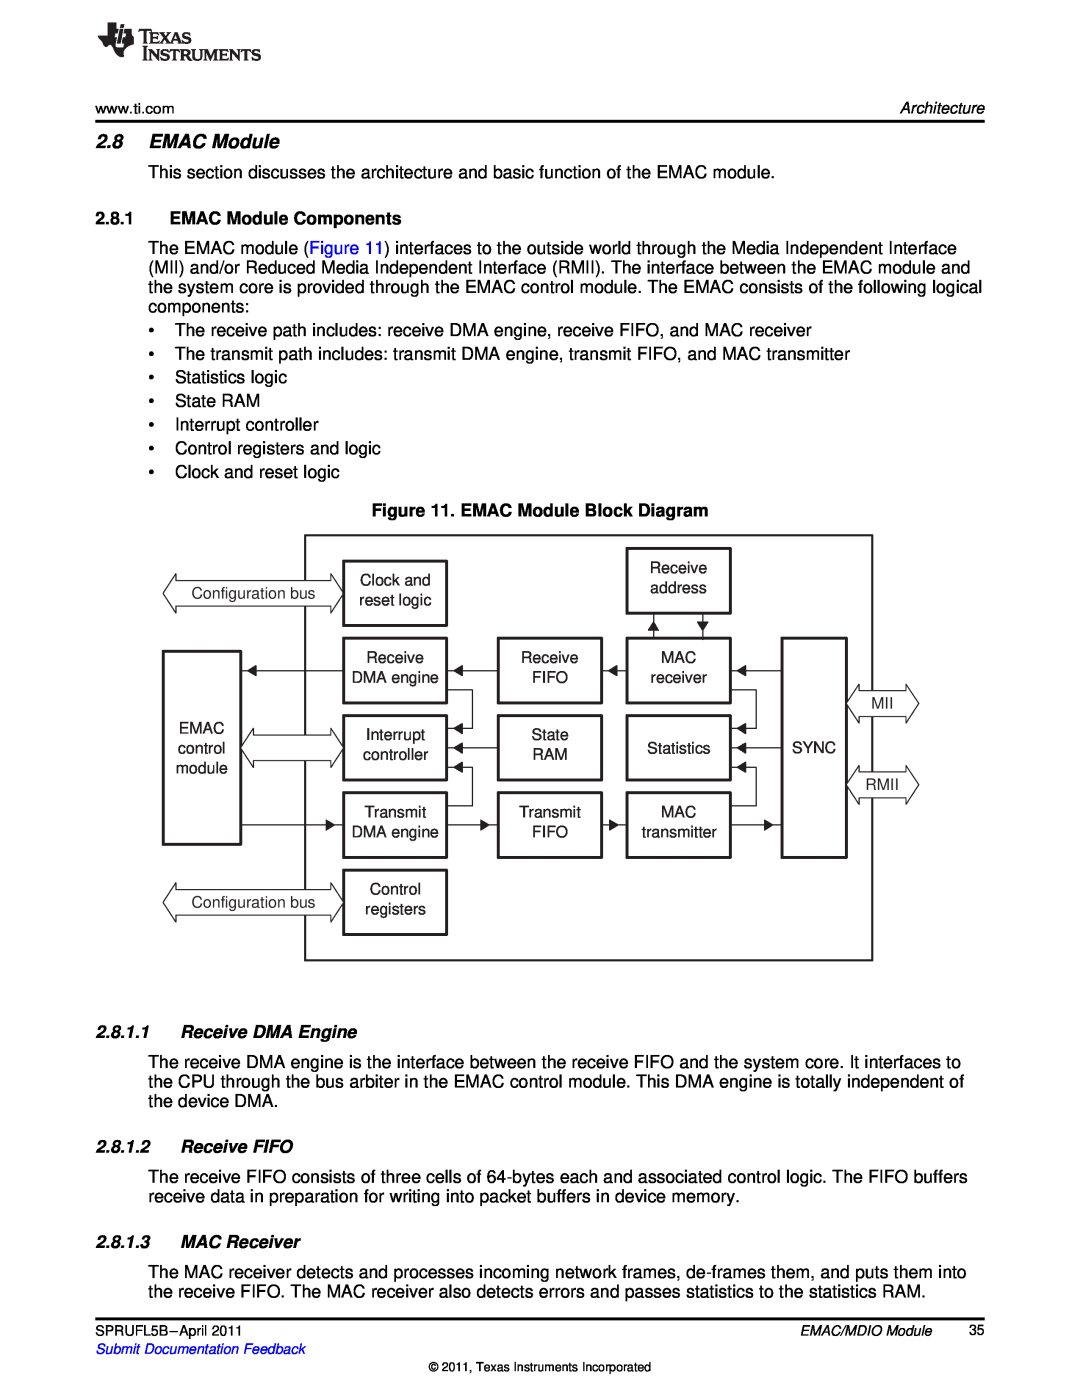 Texas Instruments TMS320C674X EMAC Module Components, EMAC Module Block Diagram, Receive DMA Engine, Receive FIFO 